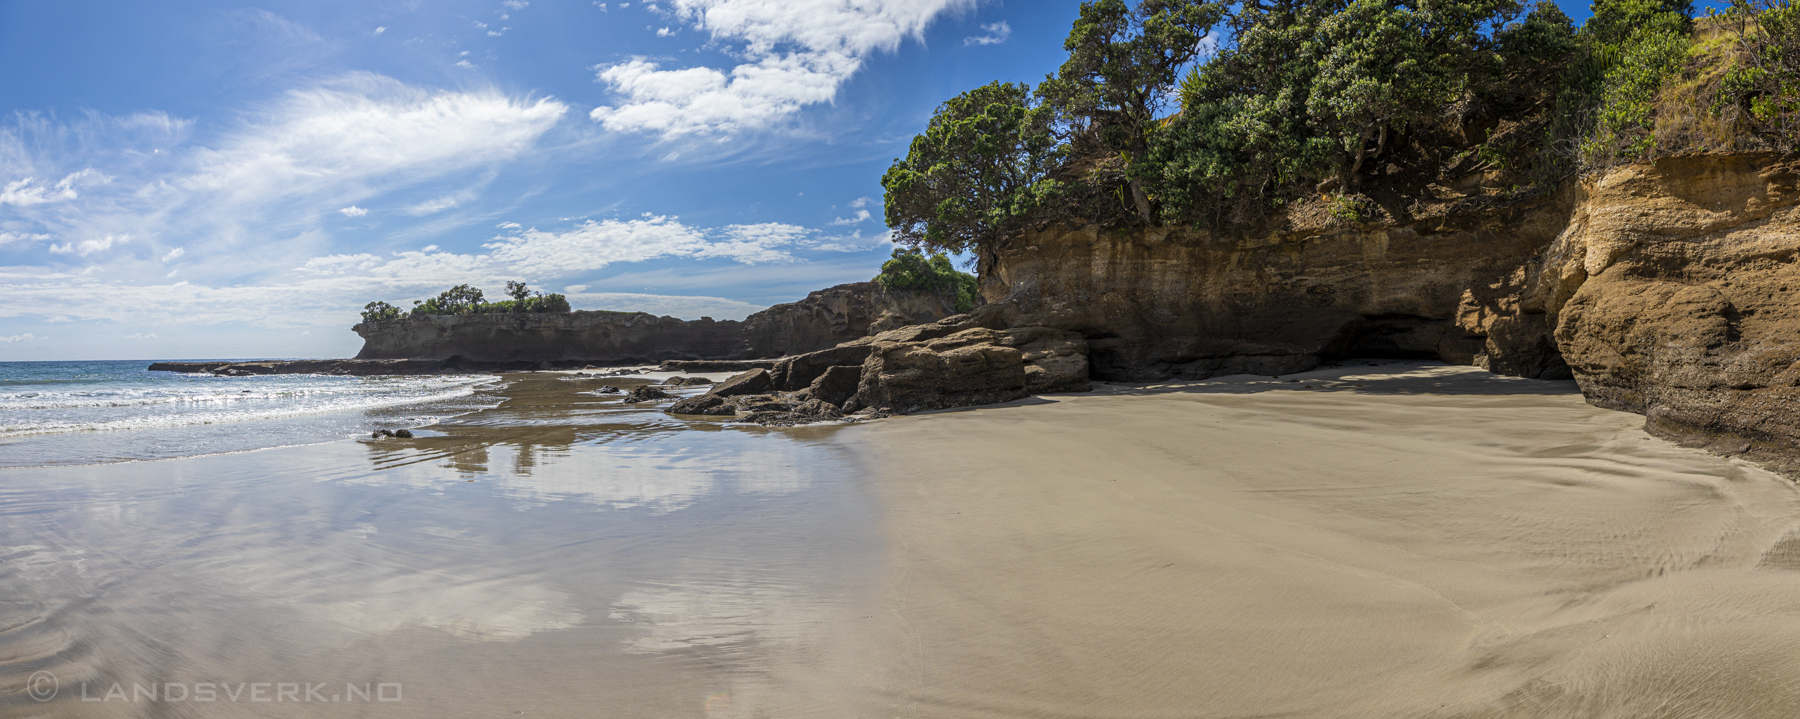 Anchor Bay, Tawharanui Regional Park, New Zealand. 

(Canon EOS 5D Mark IV / Canon EF 16-35mm f/2.8 L III USM)